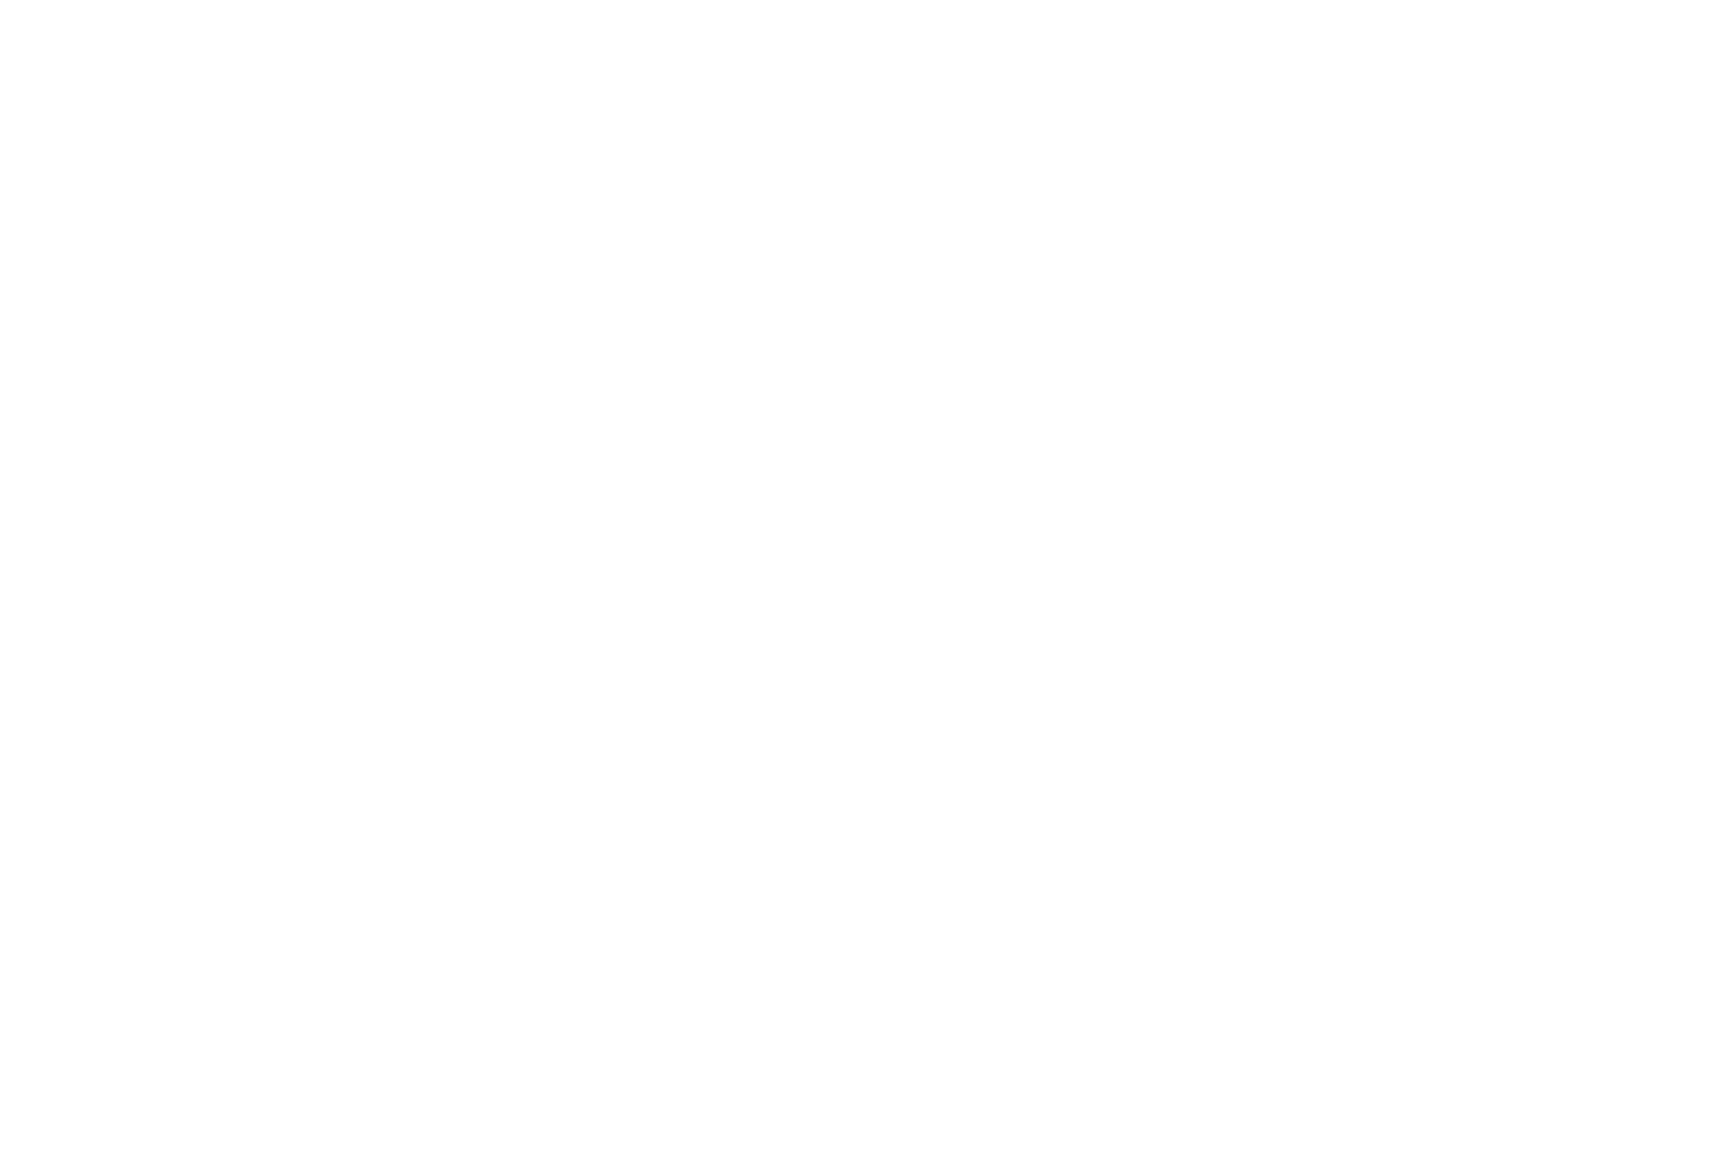 Bright International Film Festival 2023 - Finalist